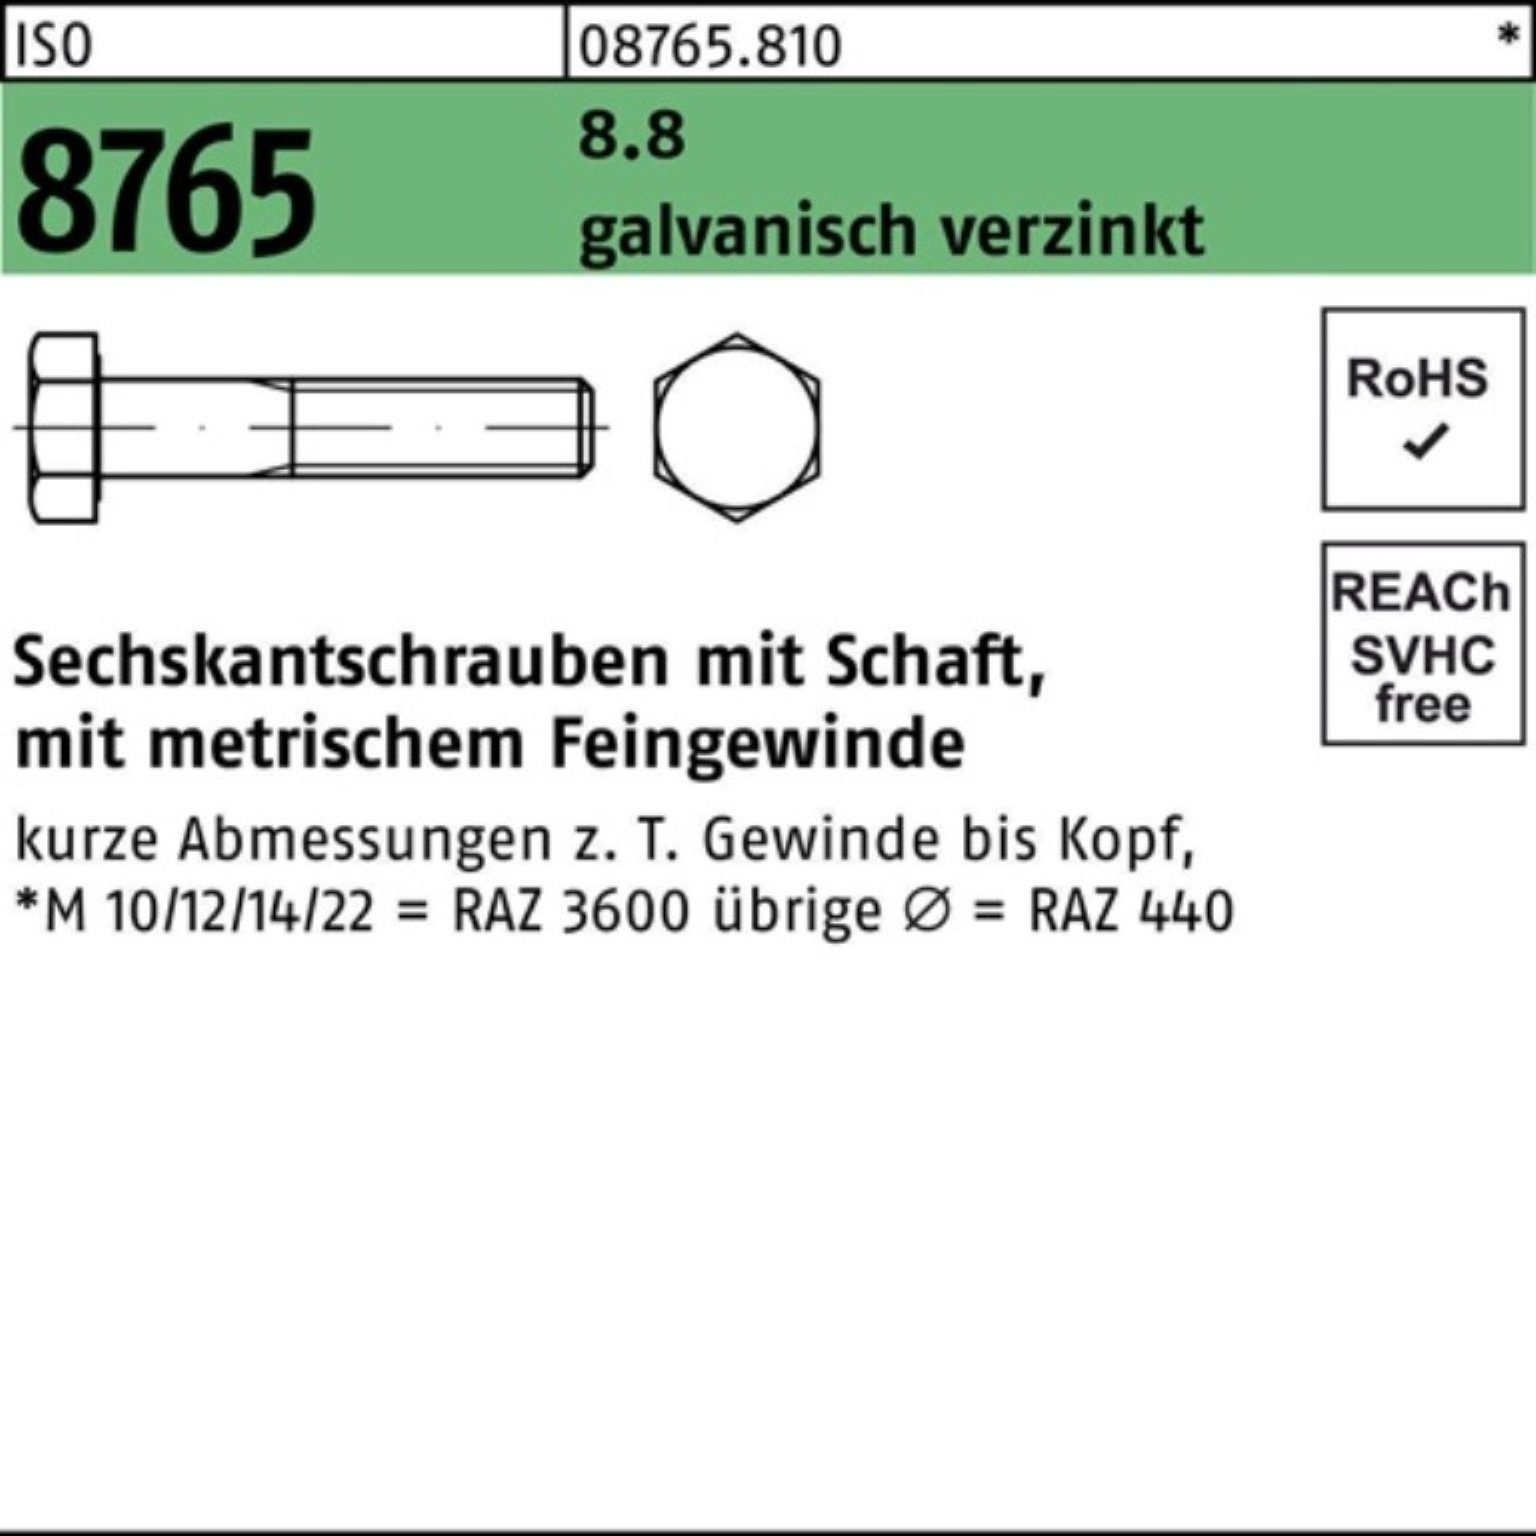 galv.verz Sechskantschraube Sechskantschraube Reyher 55 M16x1,5x 8765 Schaft Pack 100er ISO 8.8